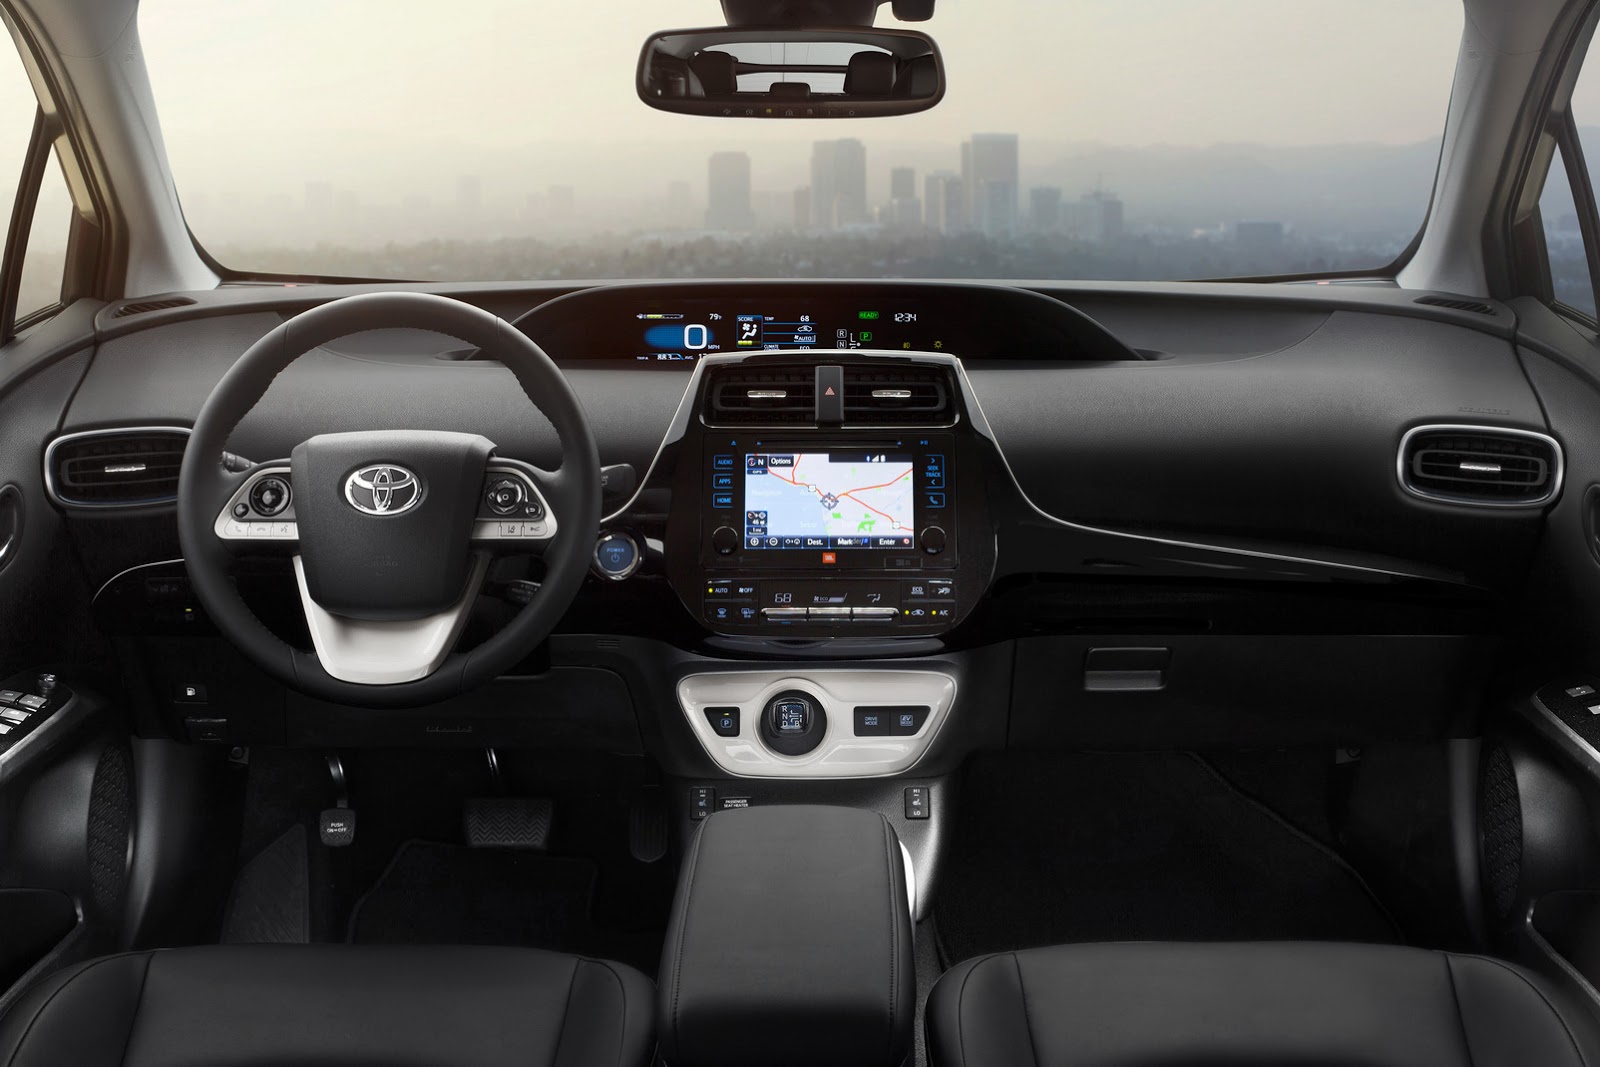 Toyota Prius Hybrid Interior